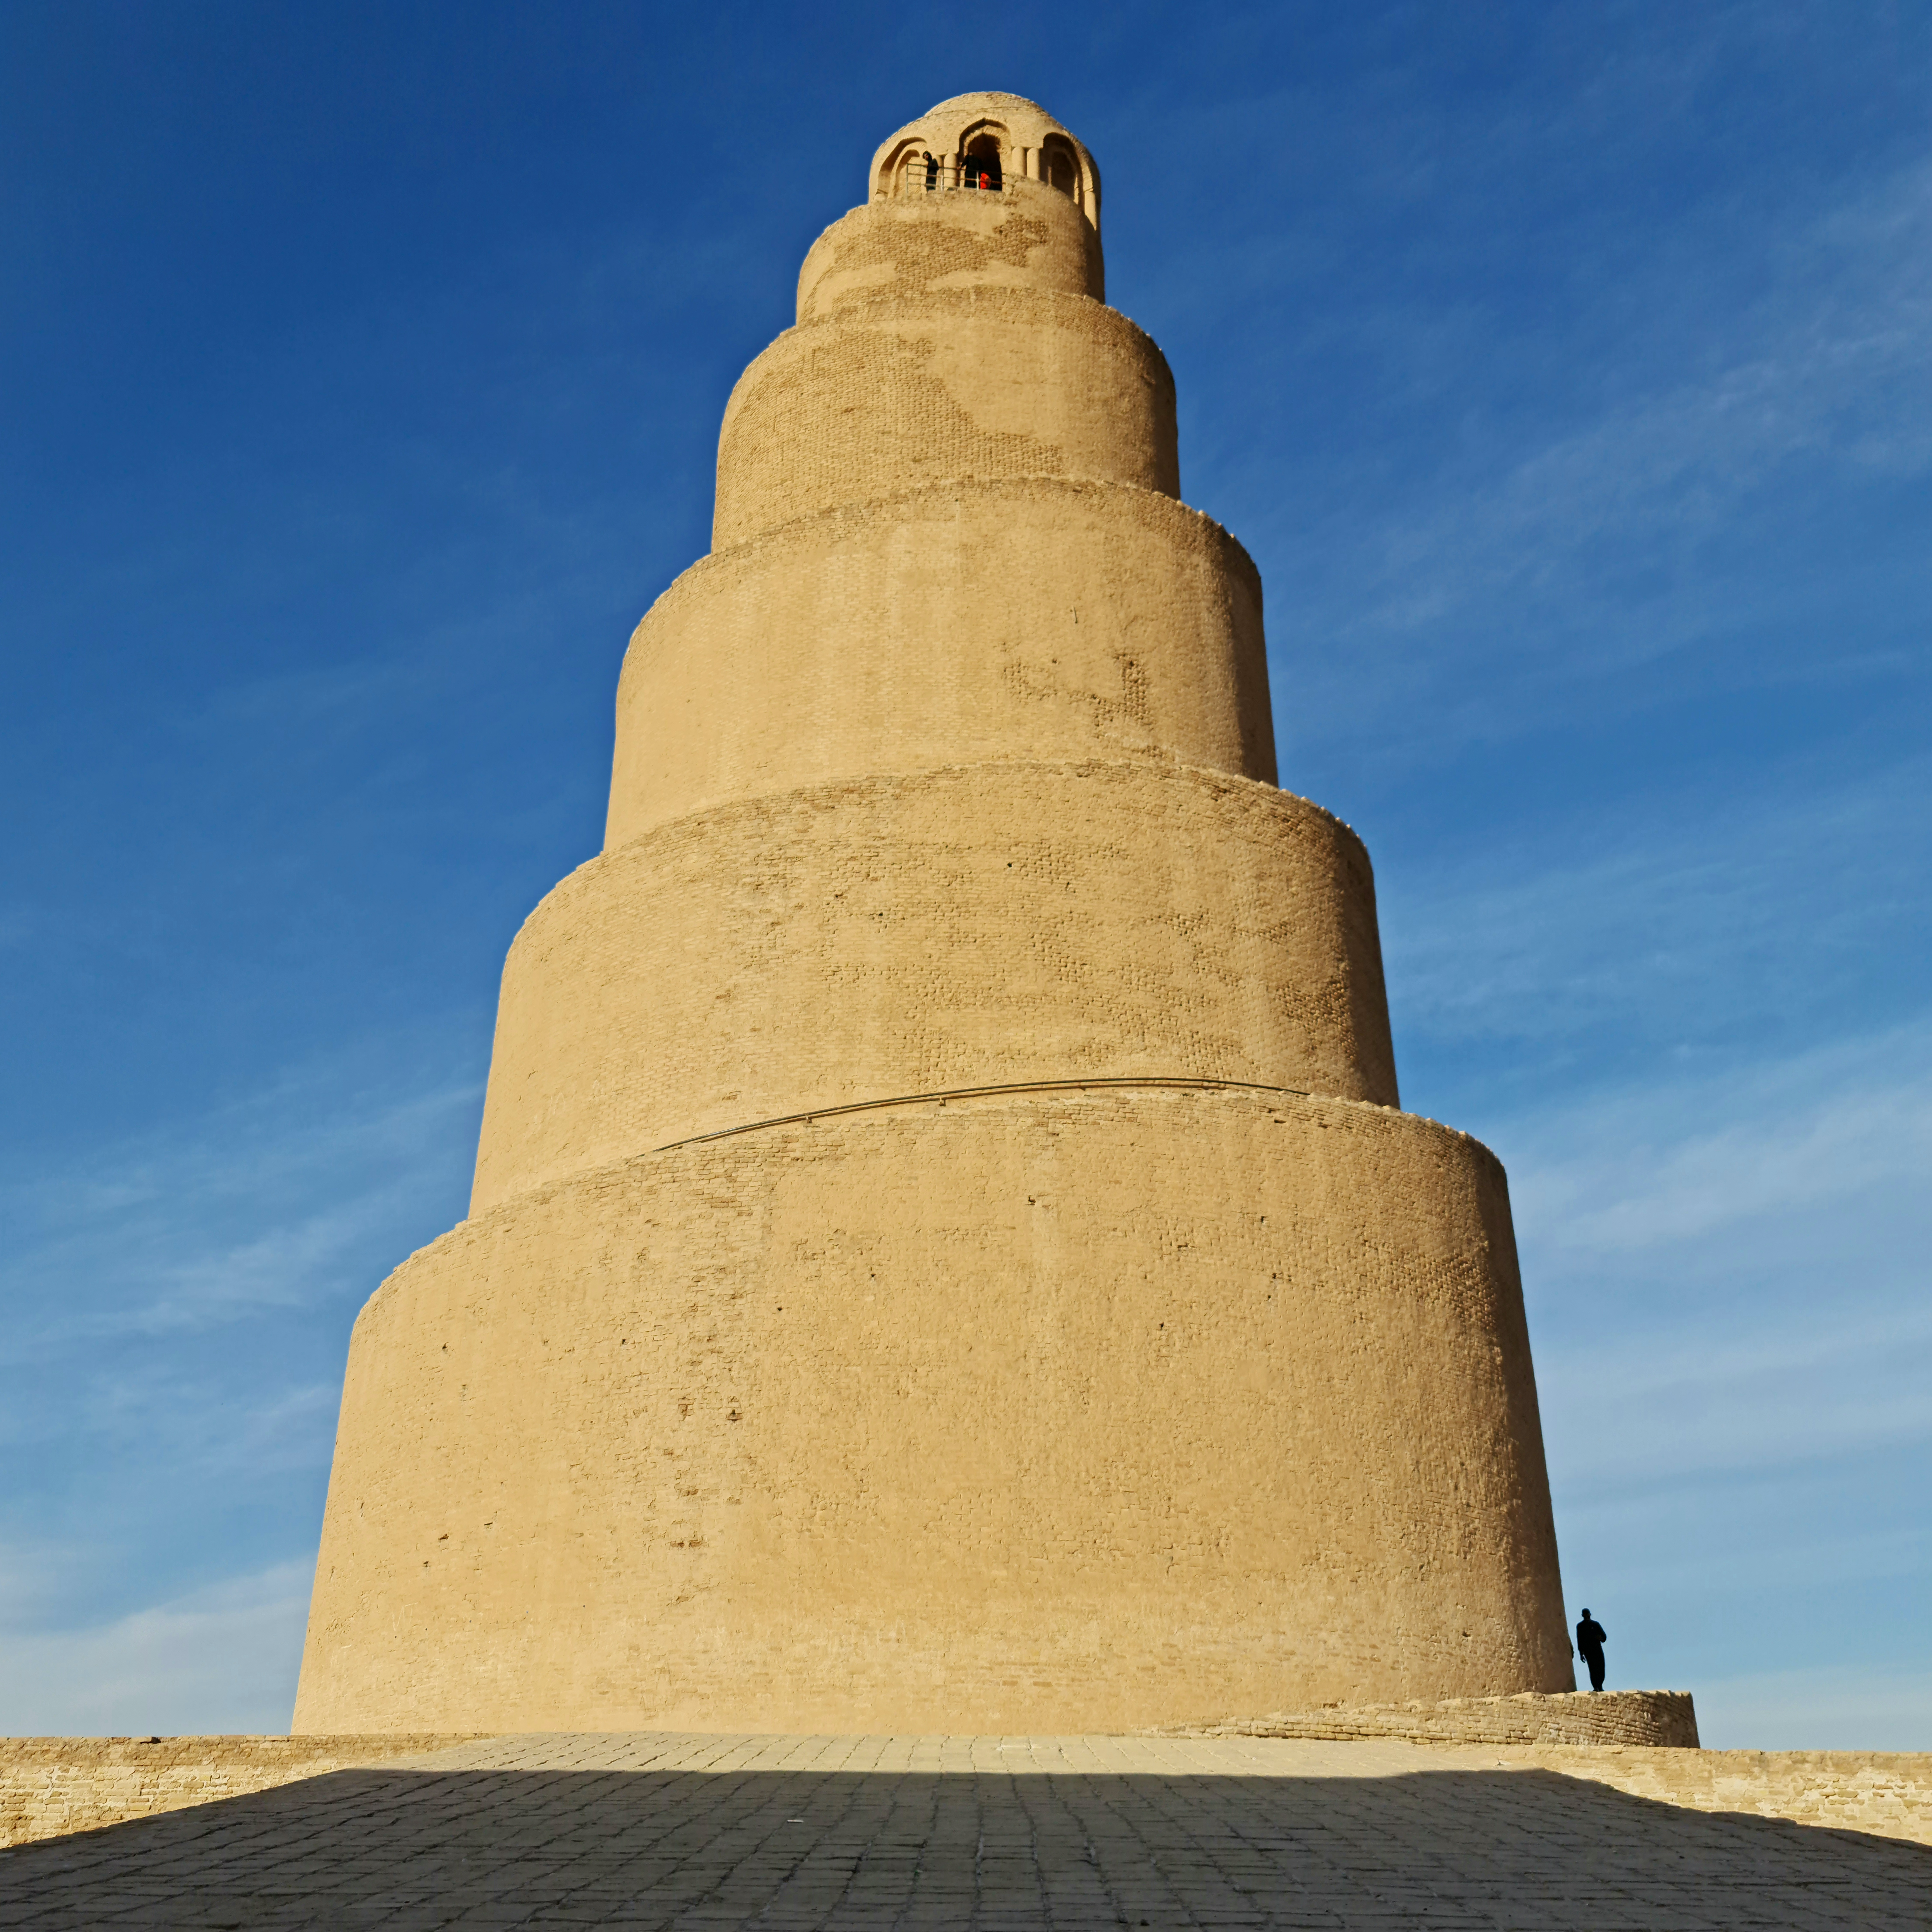 Muzyczne podróże. Irak. Minaret Al-Malawija. Samara / Fot. Dariusz J. Drajewicz